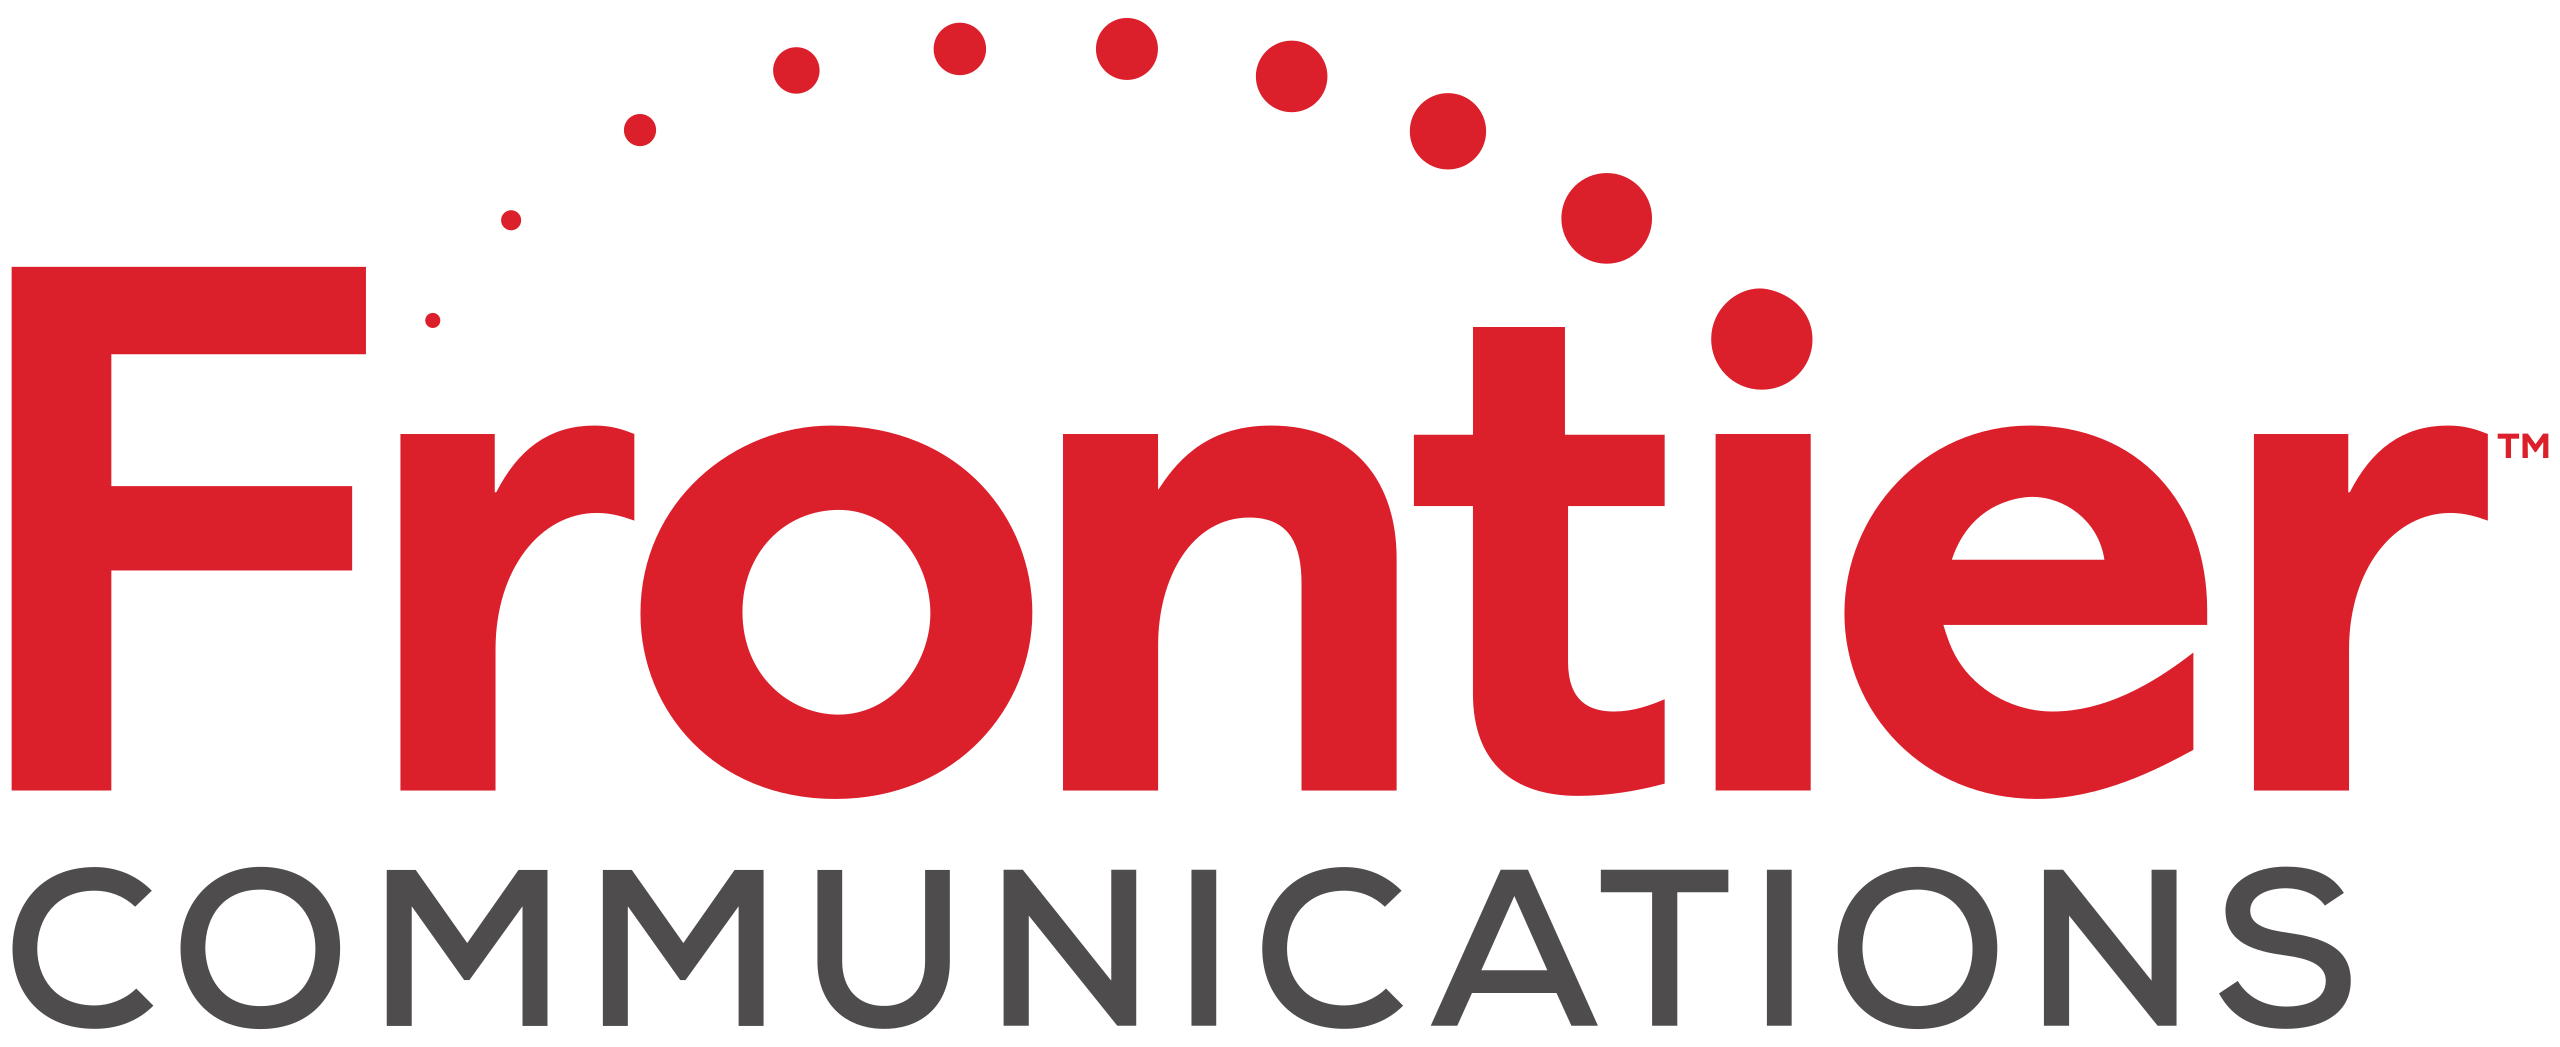 Frontier_Communications_Corporation_logo_2016